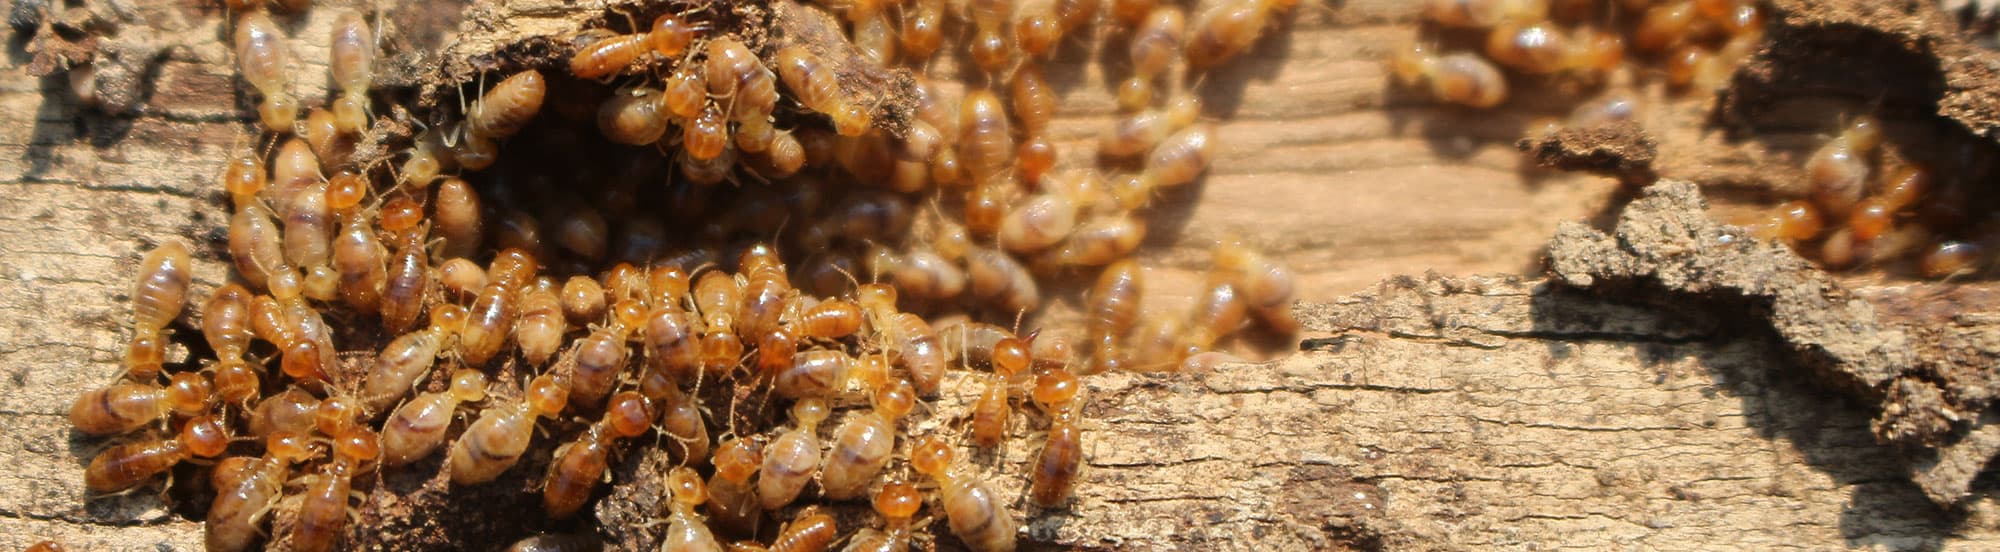 termites feeding on wood inside home